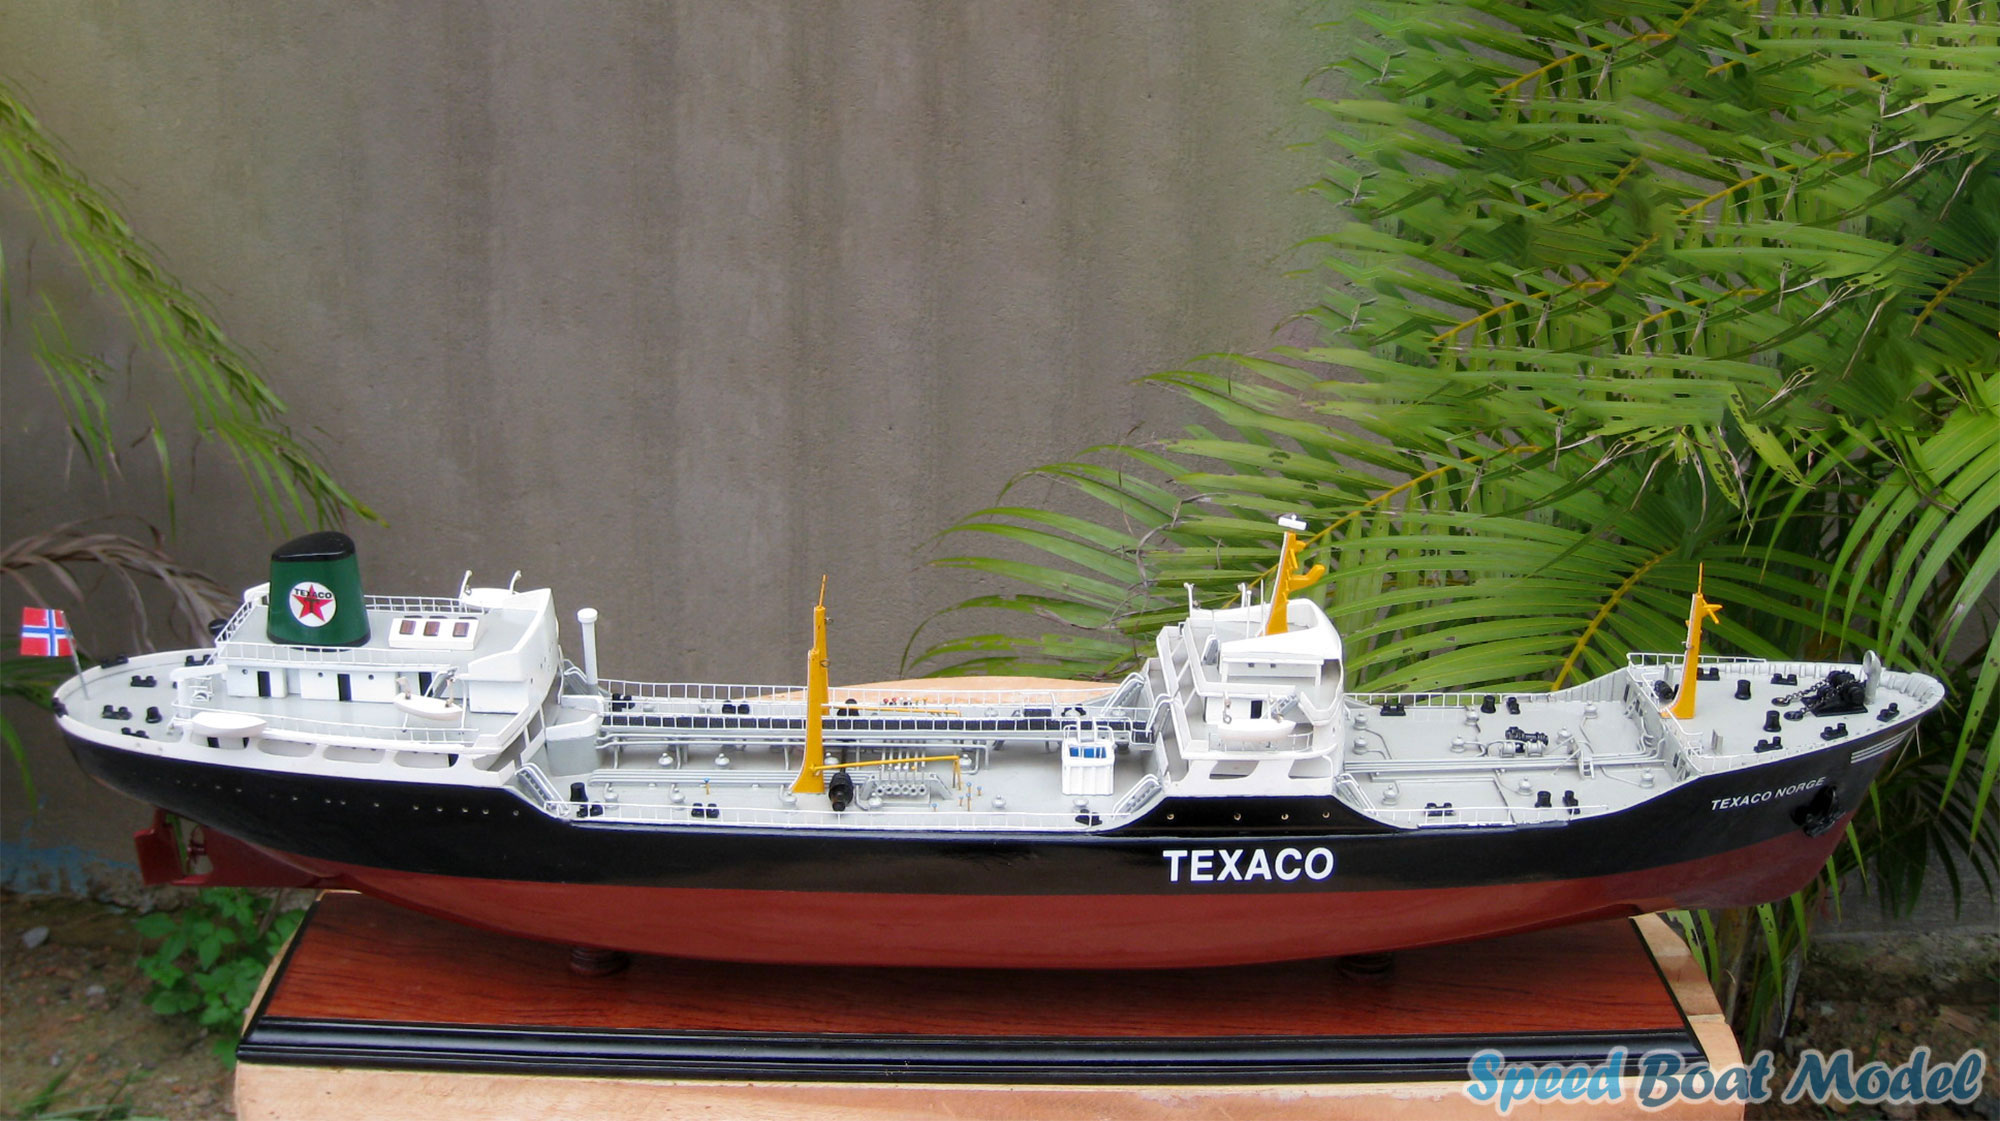 Texaco Norge Commercial Ship Model 31.5"